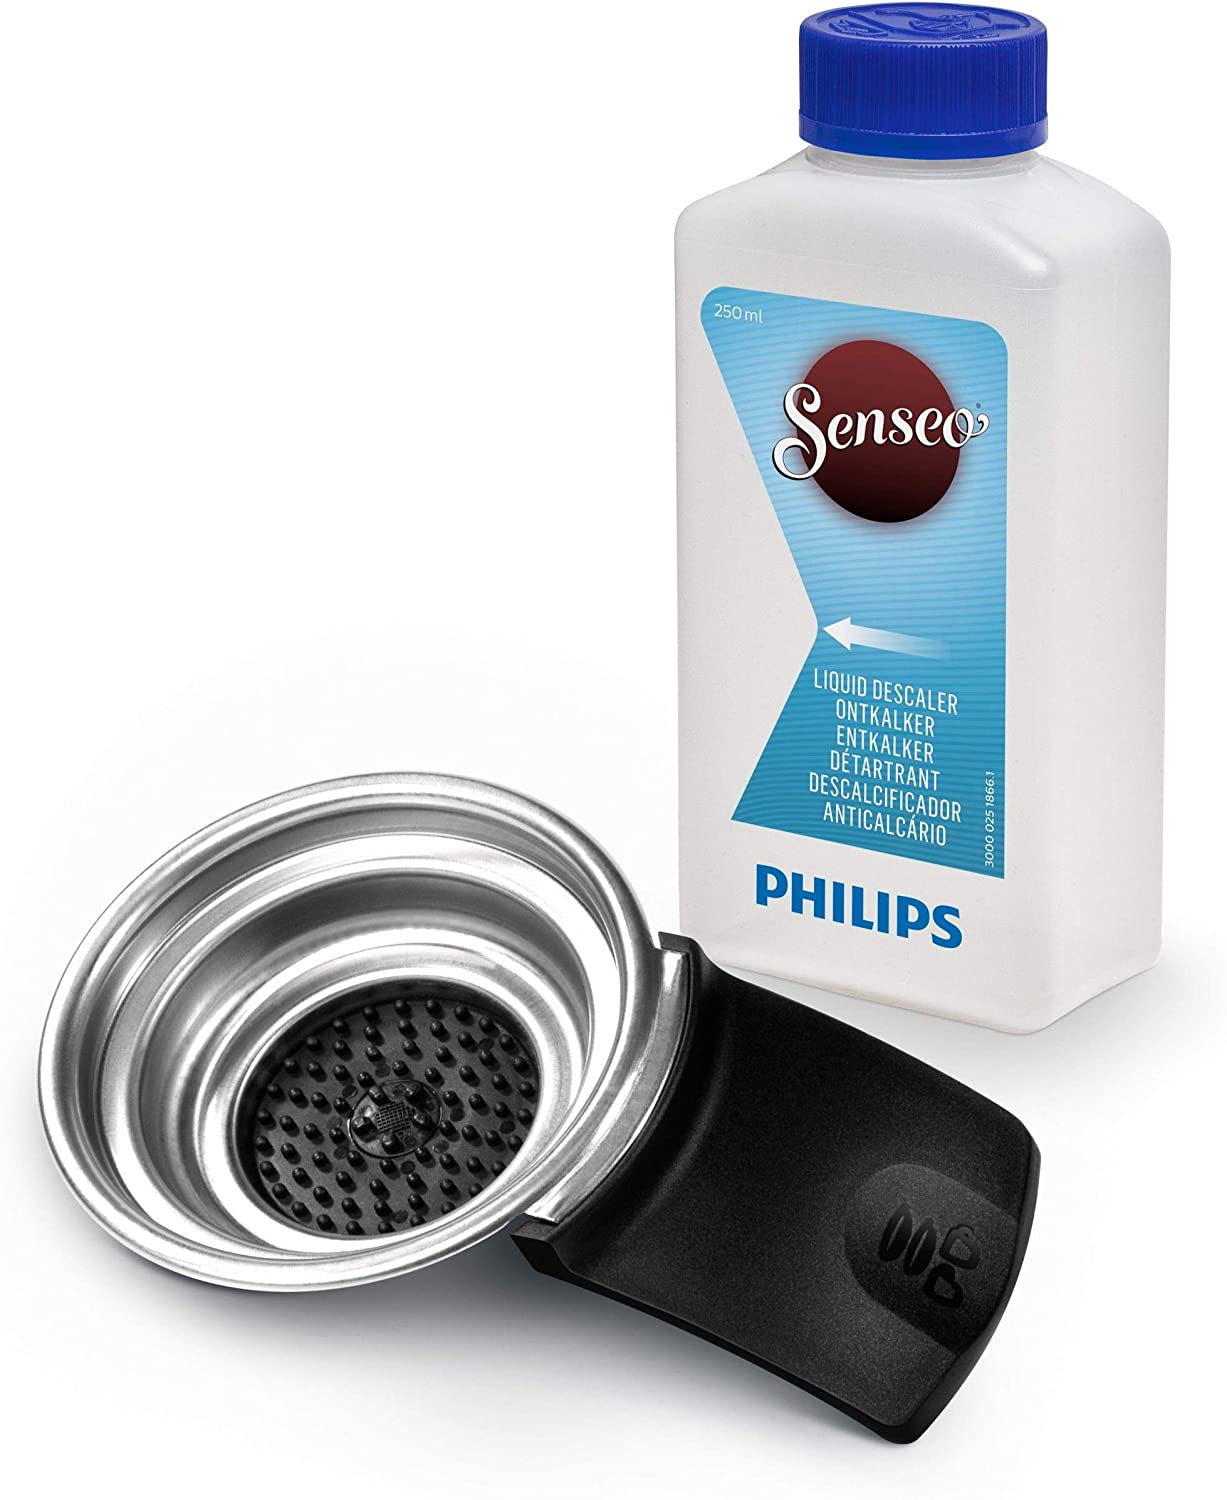 Philips Domestic Appliances Philips Senseo CA6522/01 Care Set for Senseo Original Coffee Pod Machine (Liquid Descaler and Coffee Pod Holder for 1 Cup)